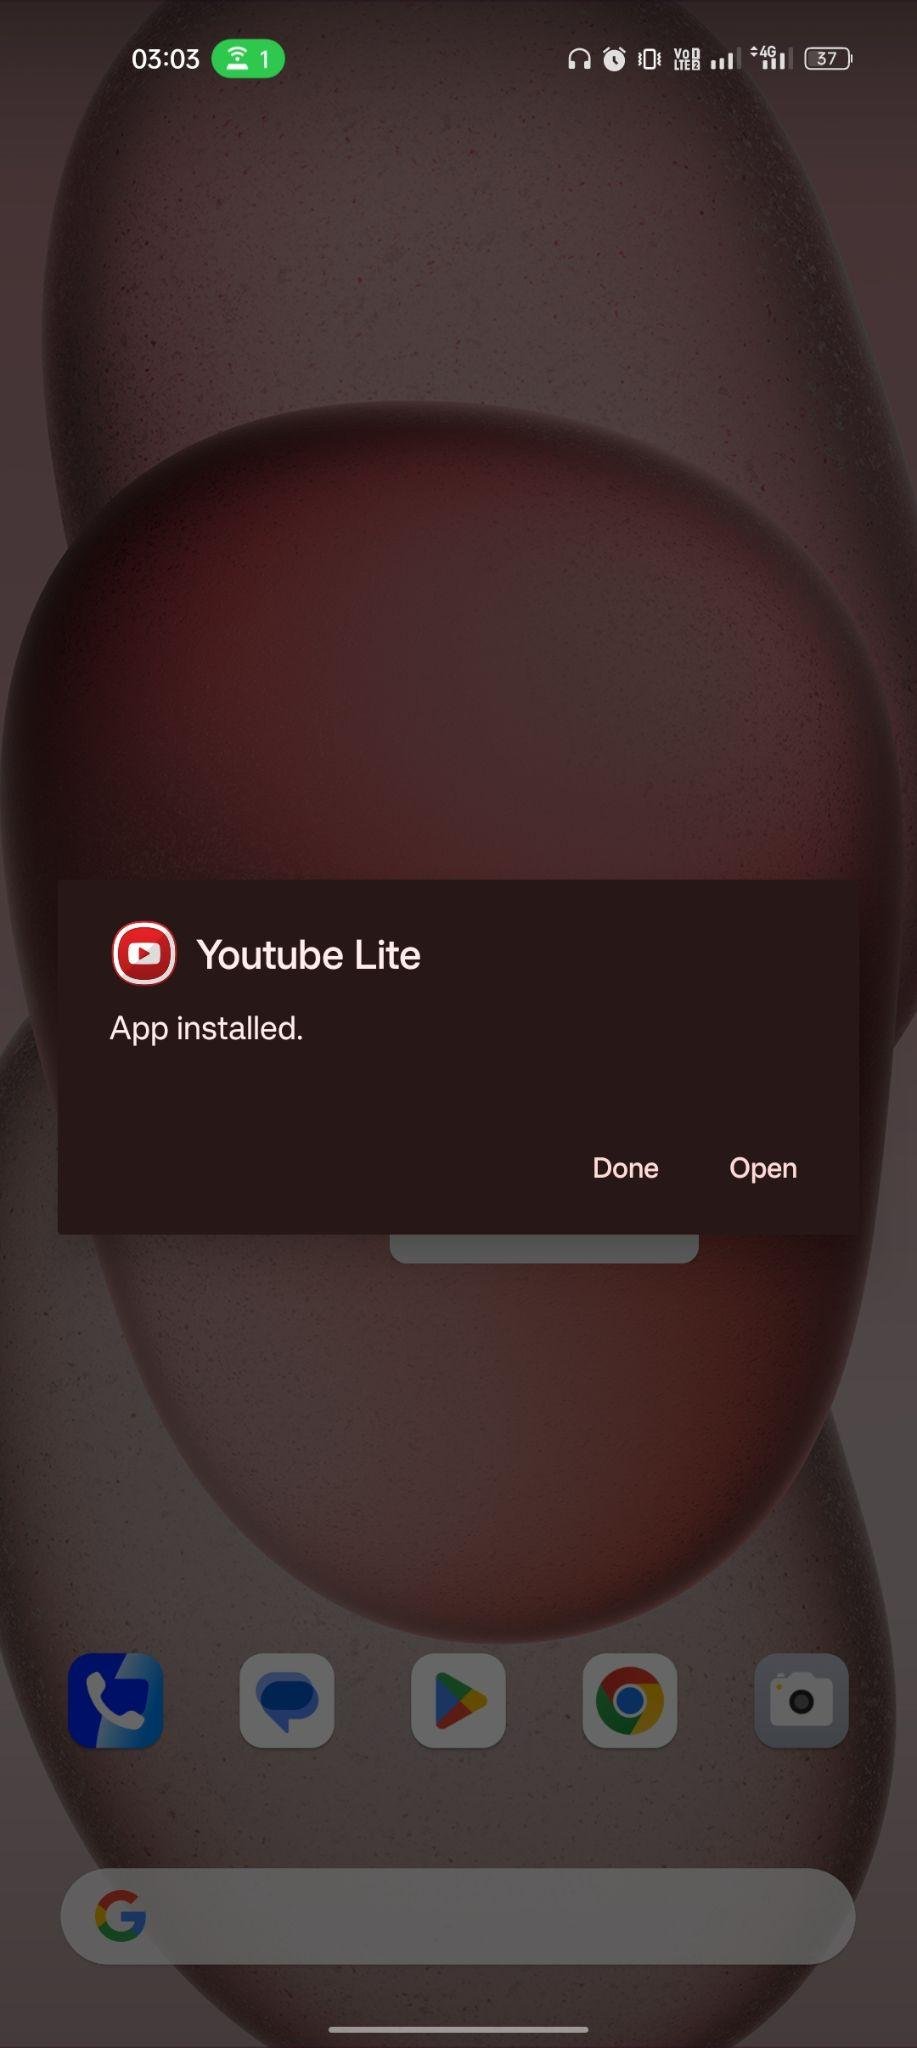 YouTube Lite apk installed